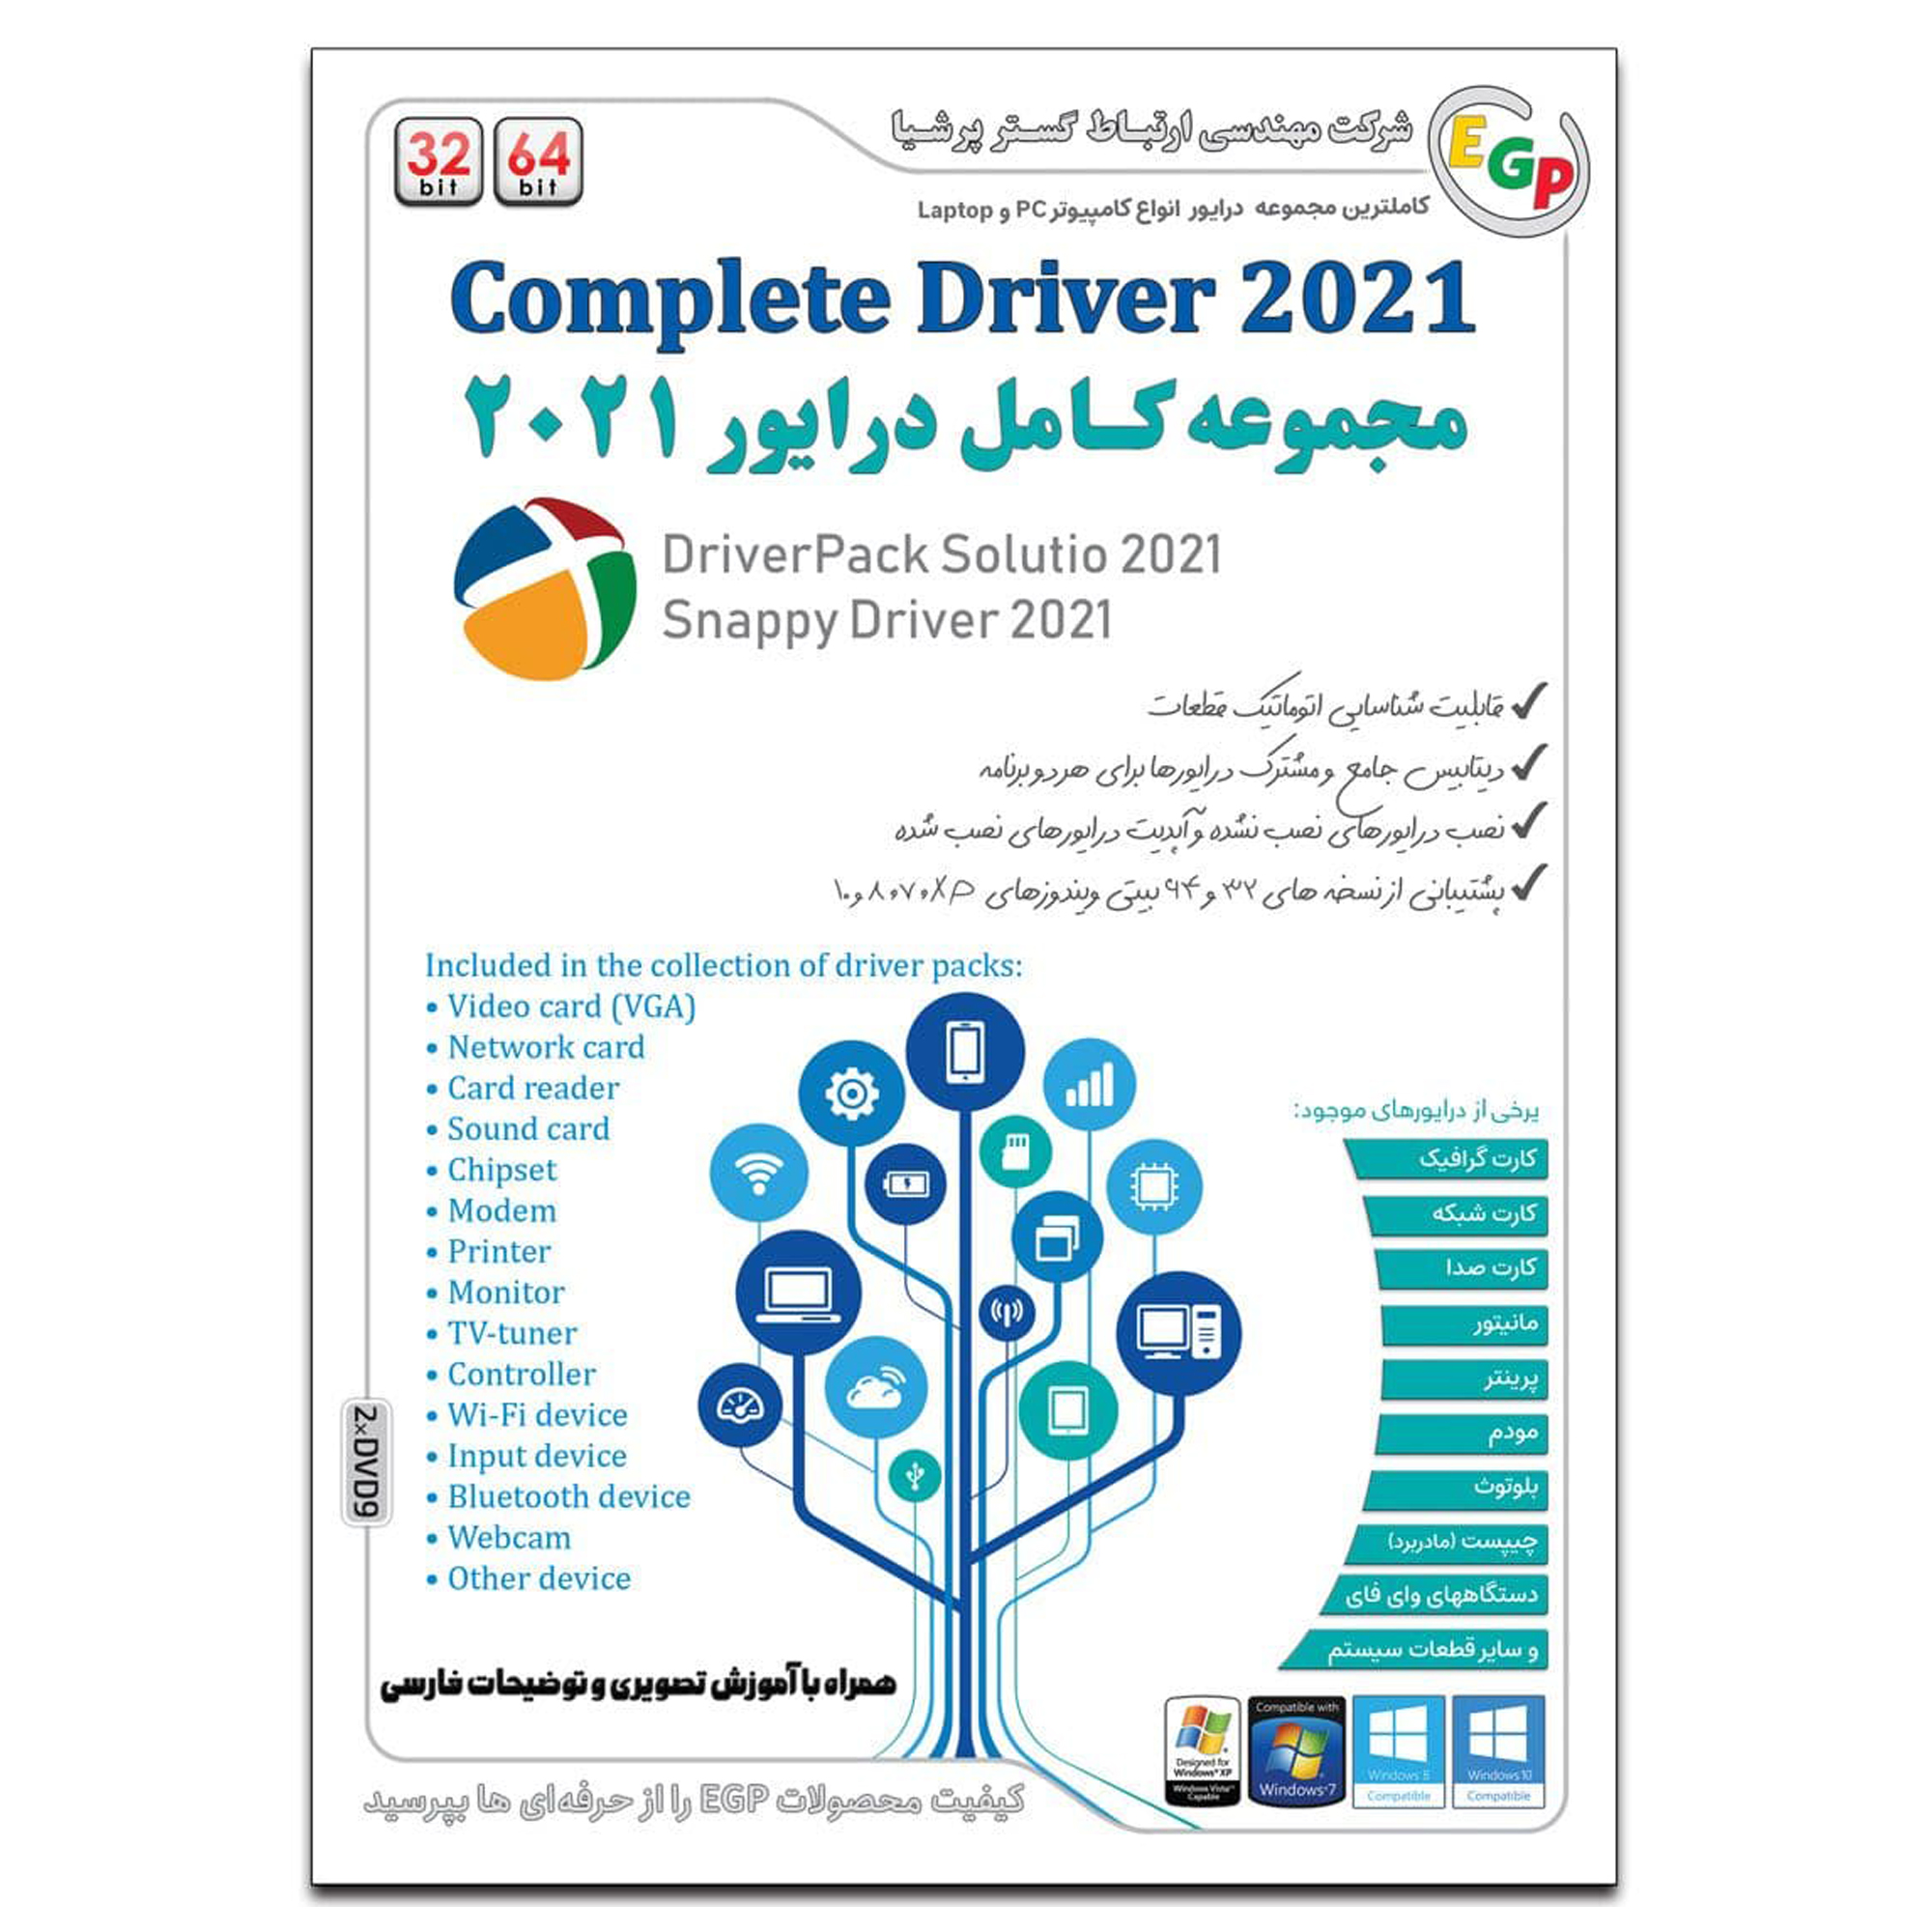 نرم افزار Complete Driver 2021 نشر ارتباط گستر پرشیا